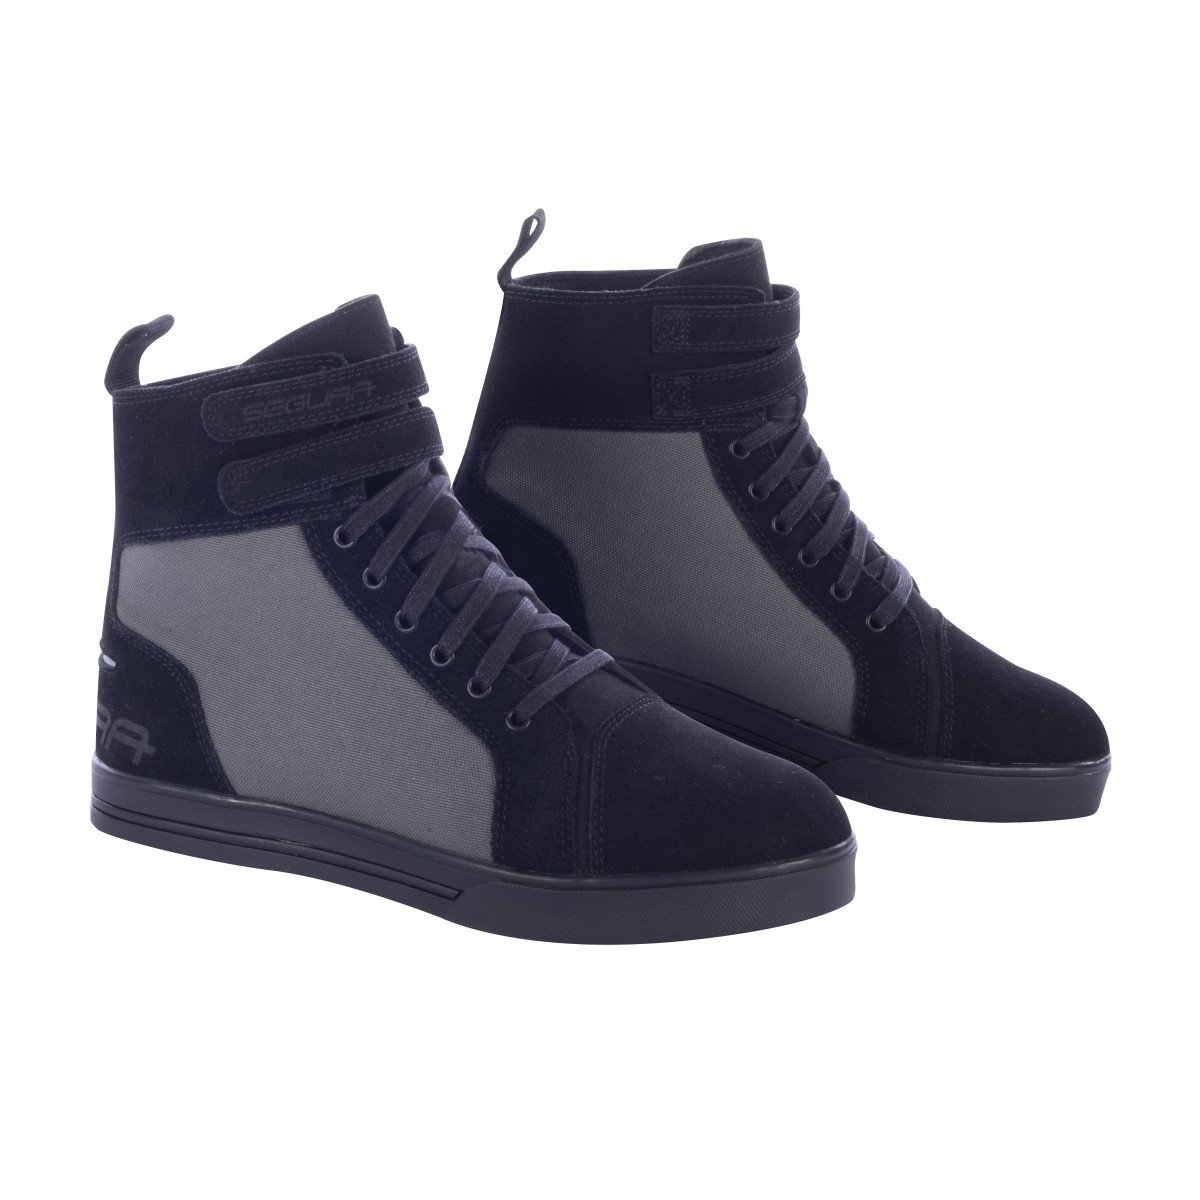 Image of Segura Sneakers Contact Black Grey Size 46 EN